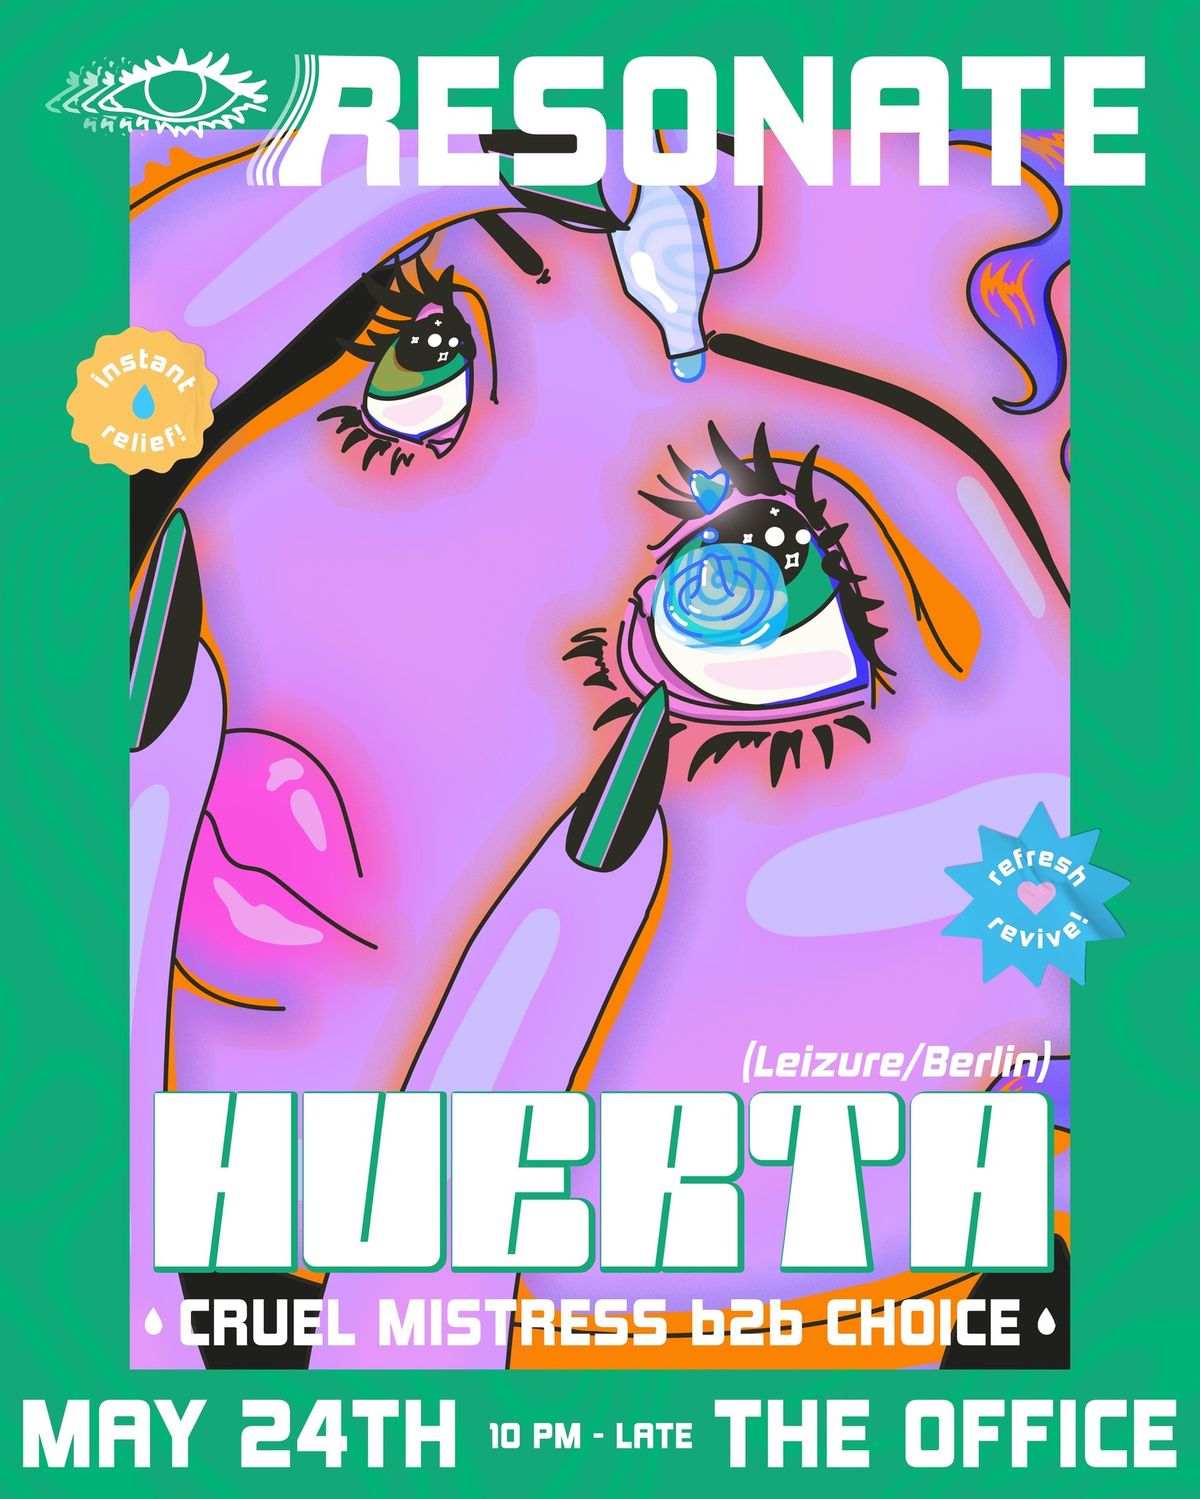 Resonate - Huerta, Cruel Mistress b2b Choice